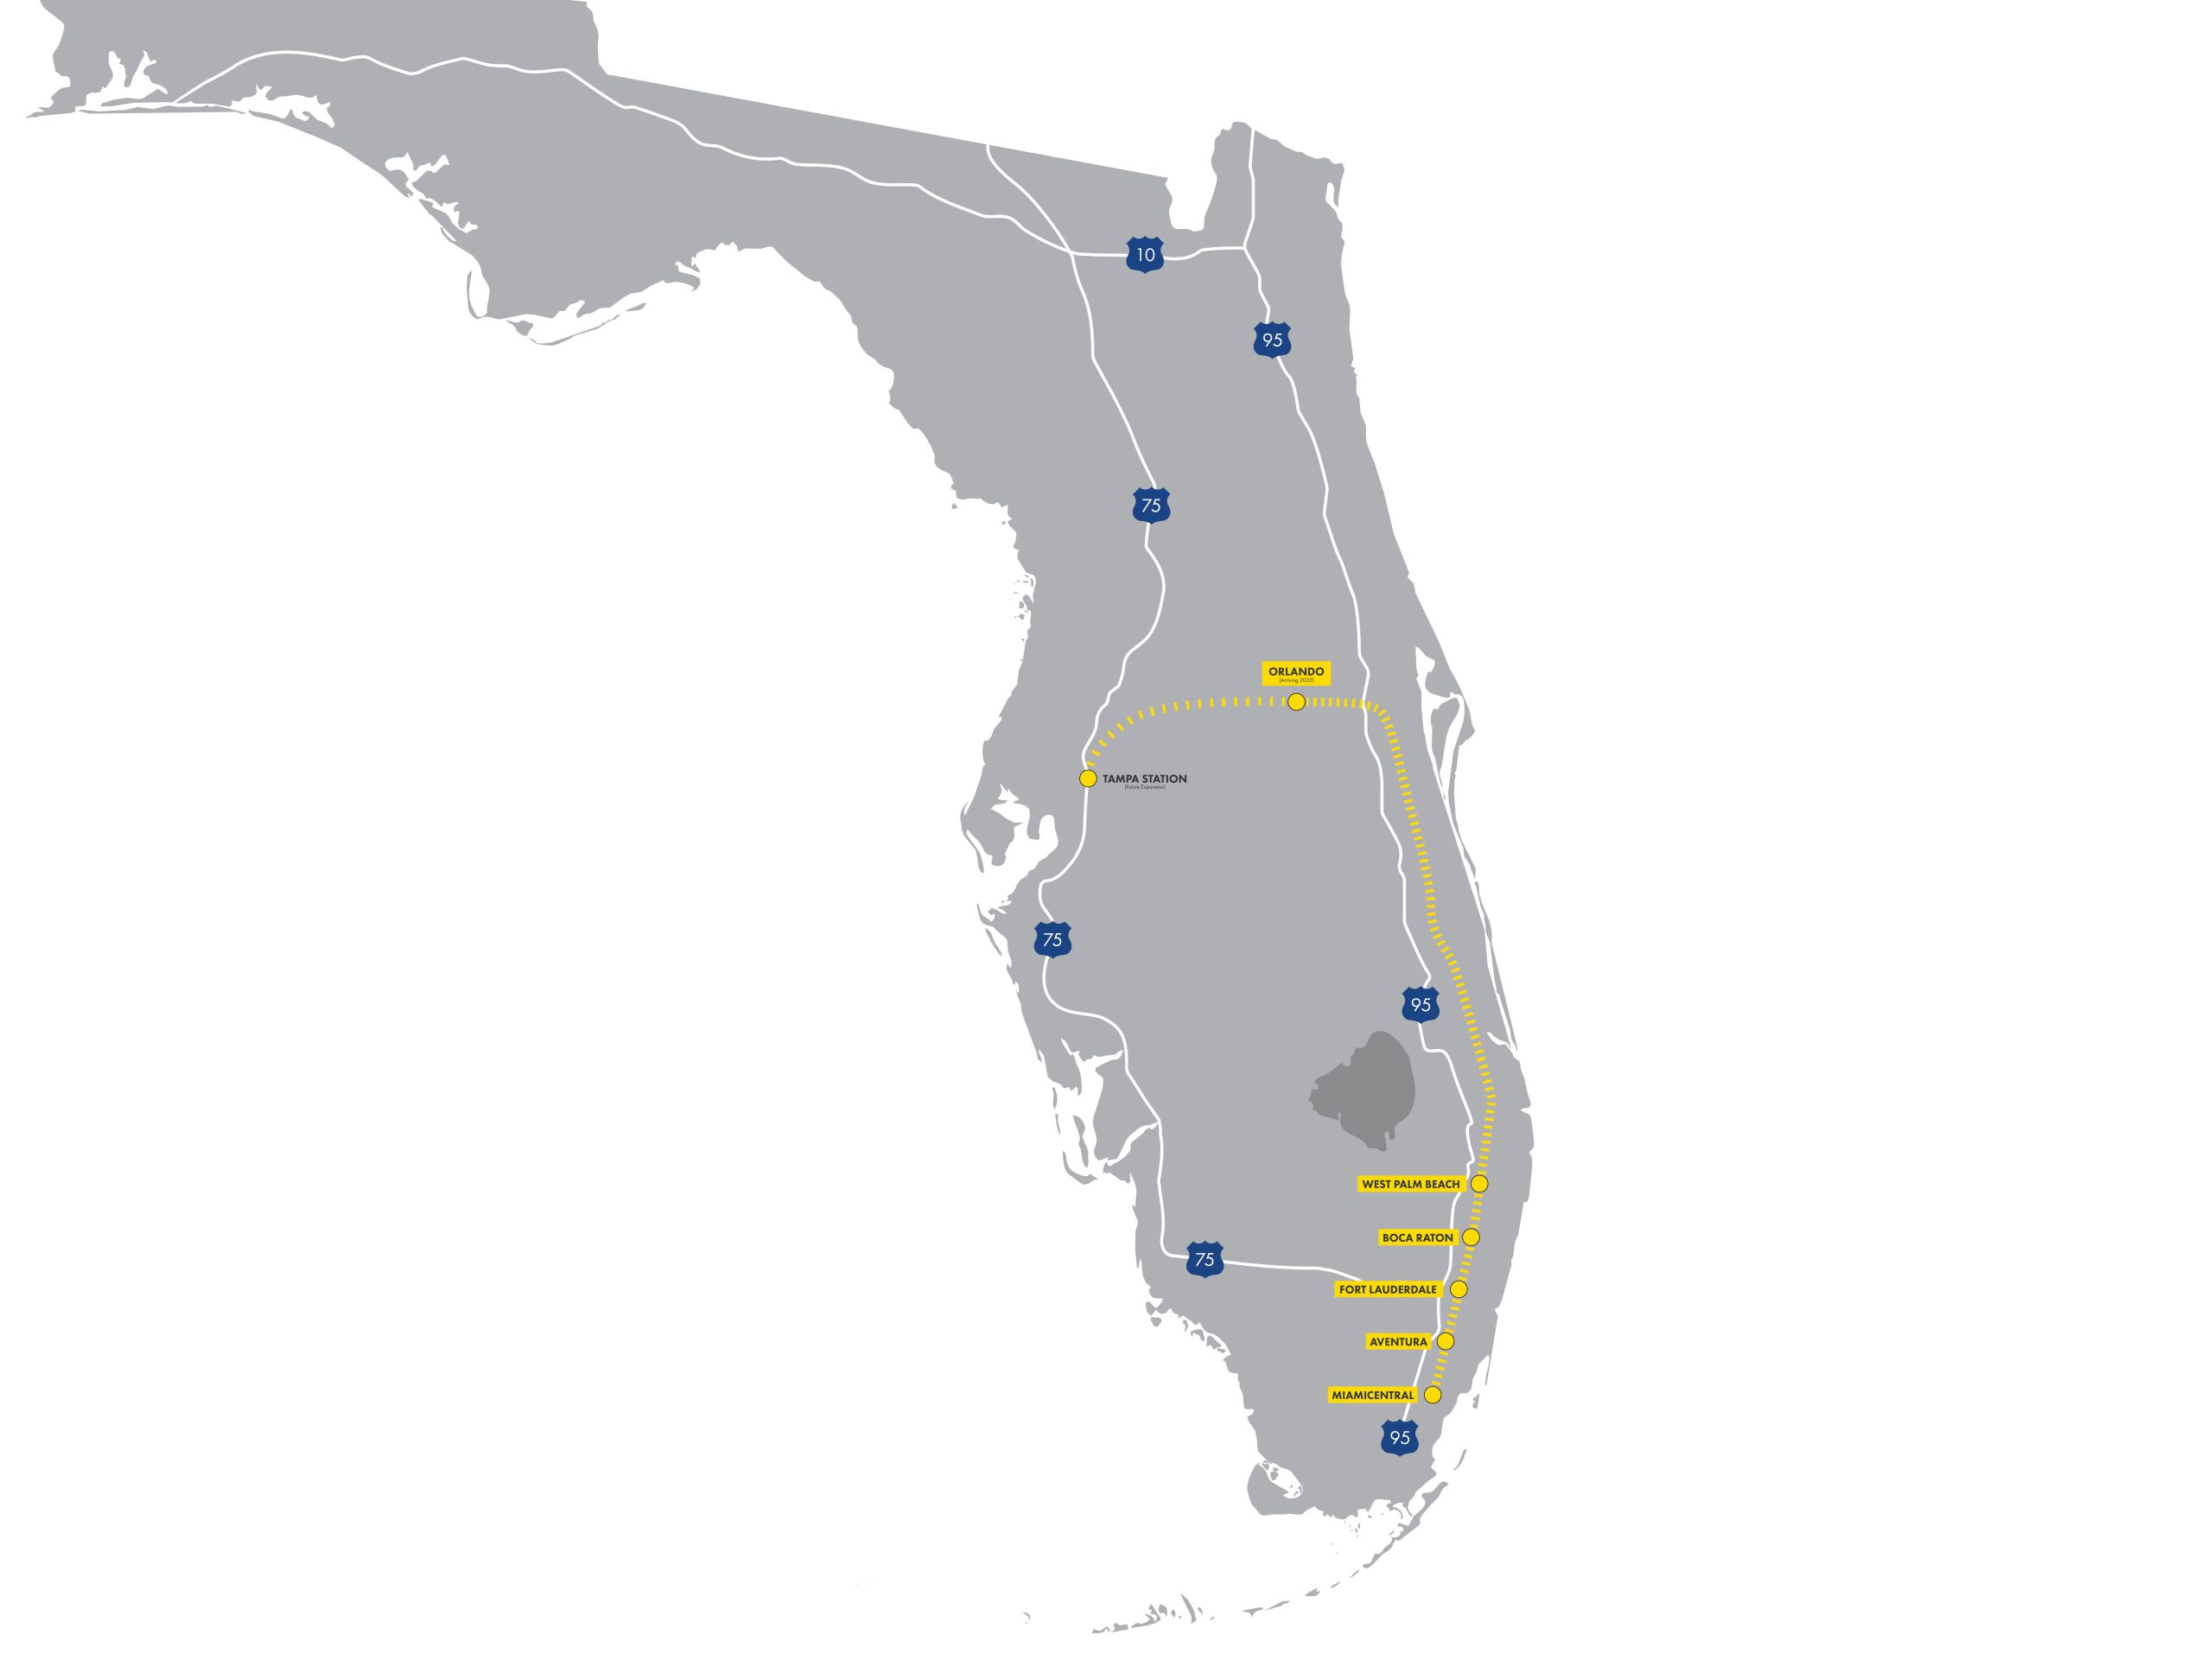 Brightline's Florida route map